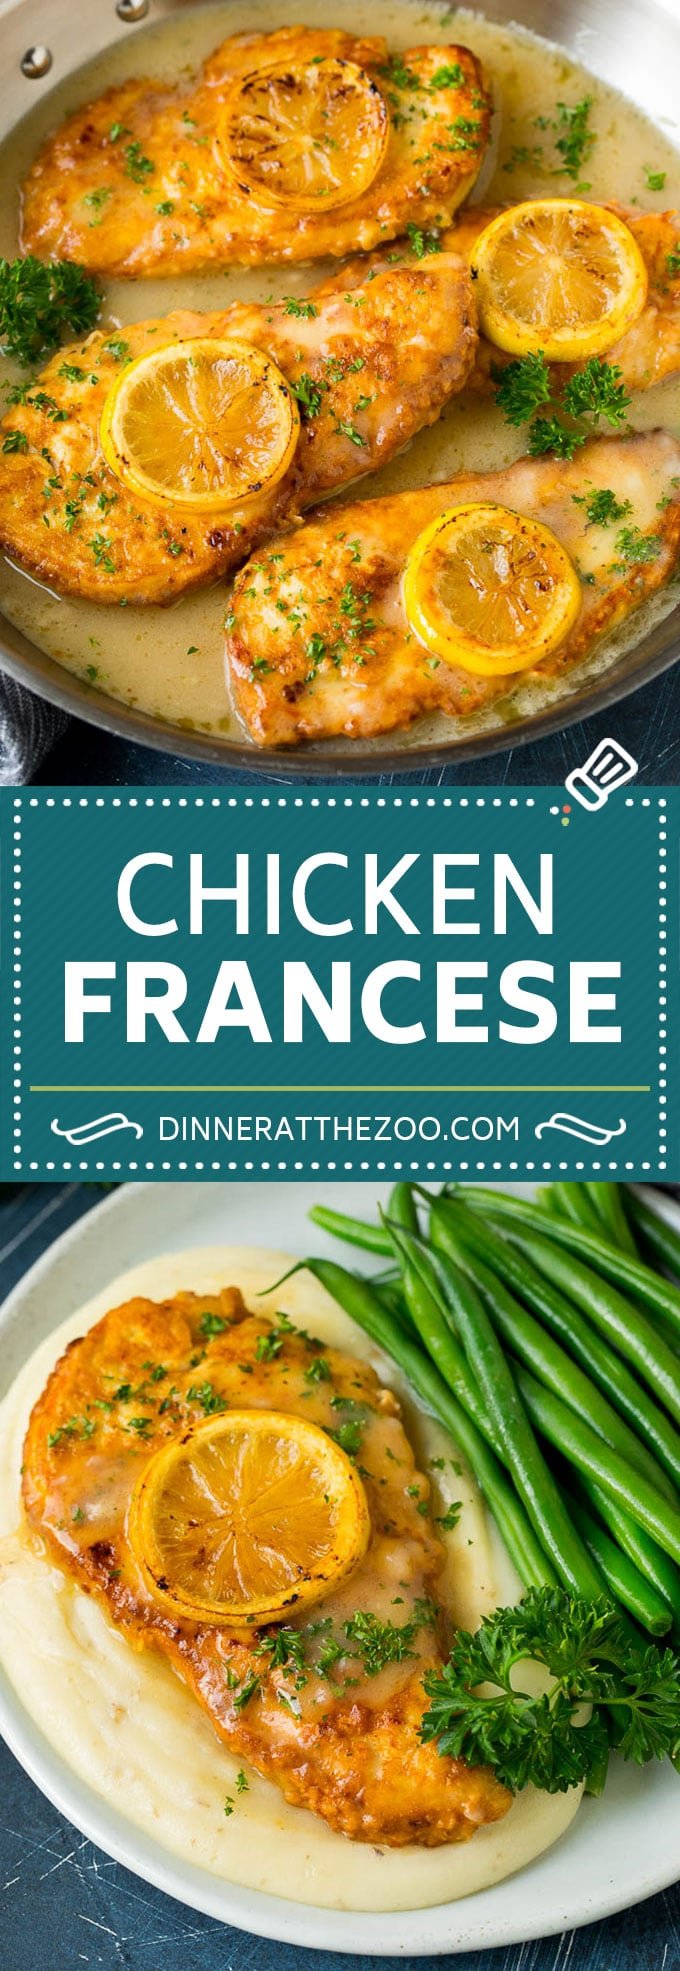 Chicken Francese Recipe #chicken #lemon #dinner #dinneratthezoo